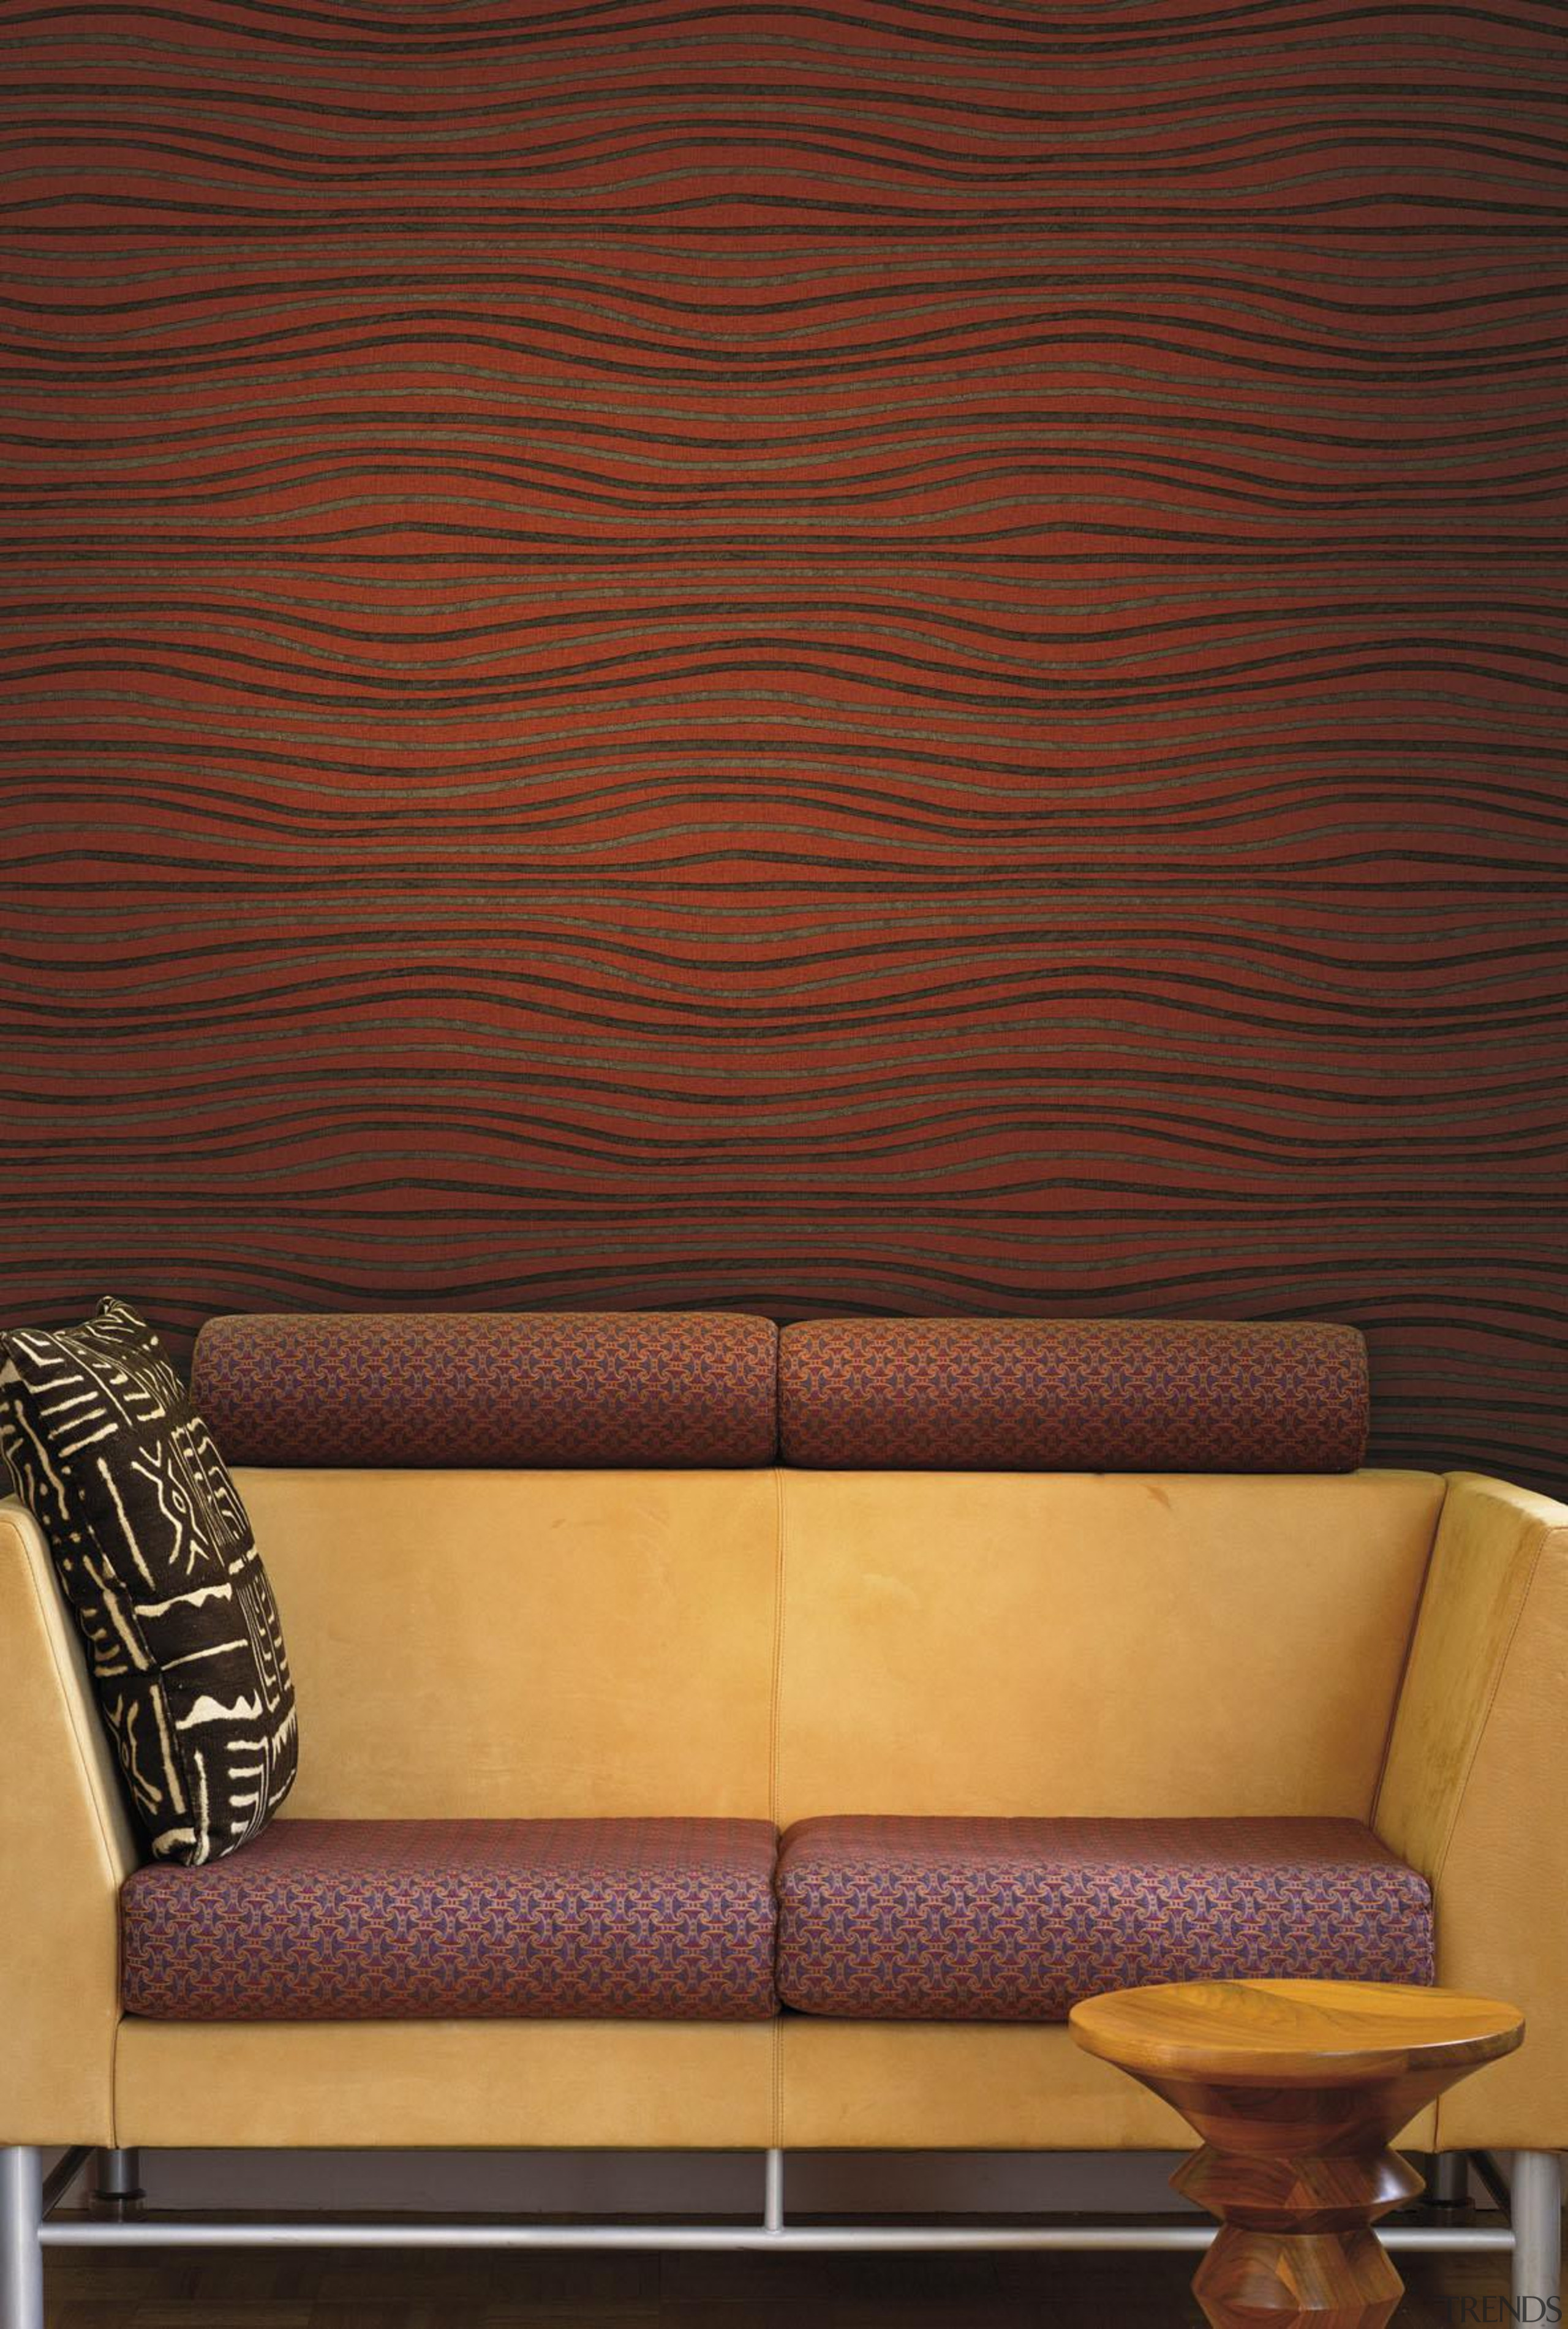 Italian Color Range - Italian Color Range - couch, floor, flooring, furniture, hardwood, interior design, living room, wall, window covering, wood, wood flooring, wood stain, red, brown